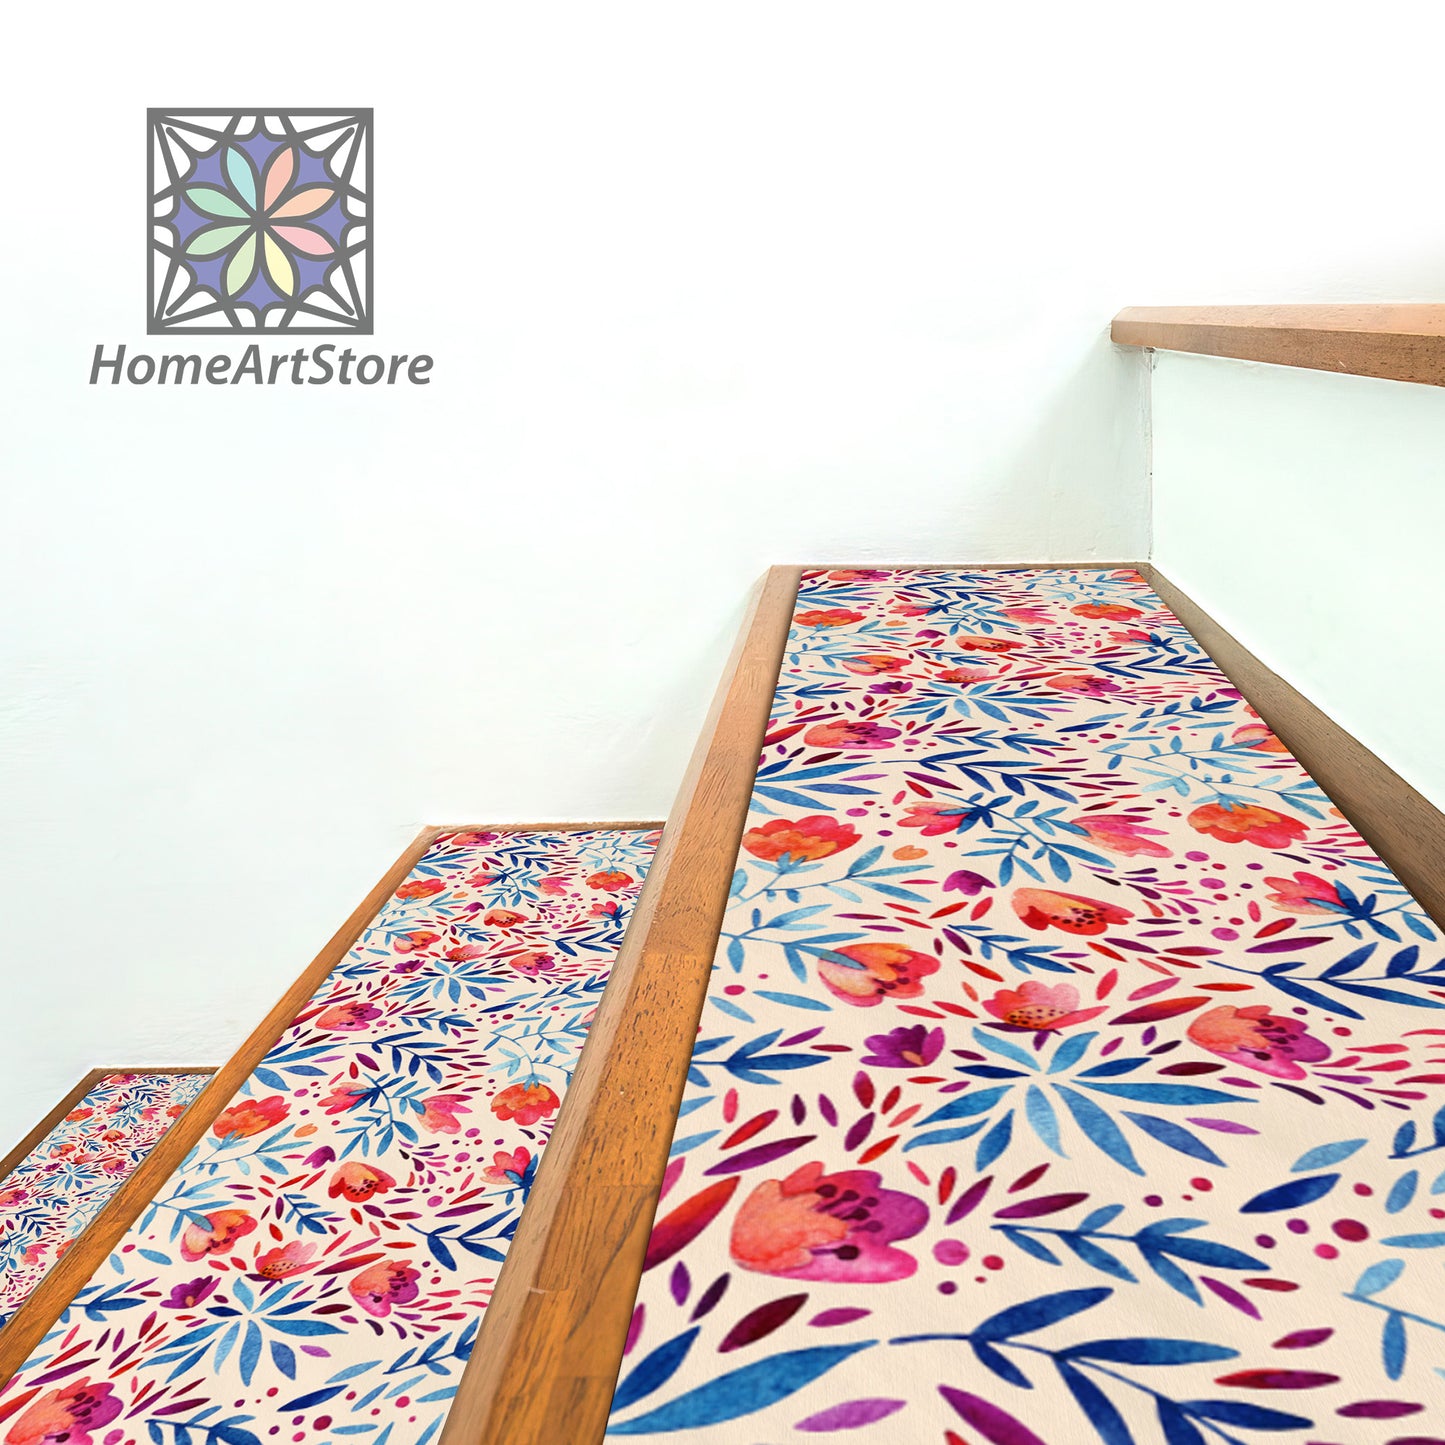 Floral Pattern Stair Rugs, Flower Stair Treads Mats, Non-slip Backing Carpet, Bohemian Home Decor